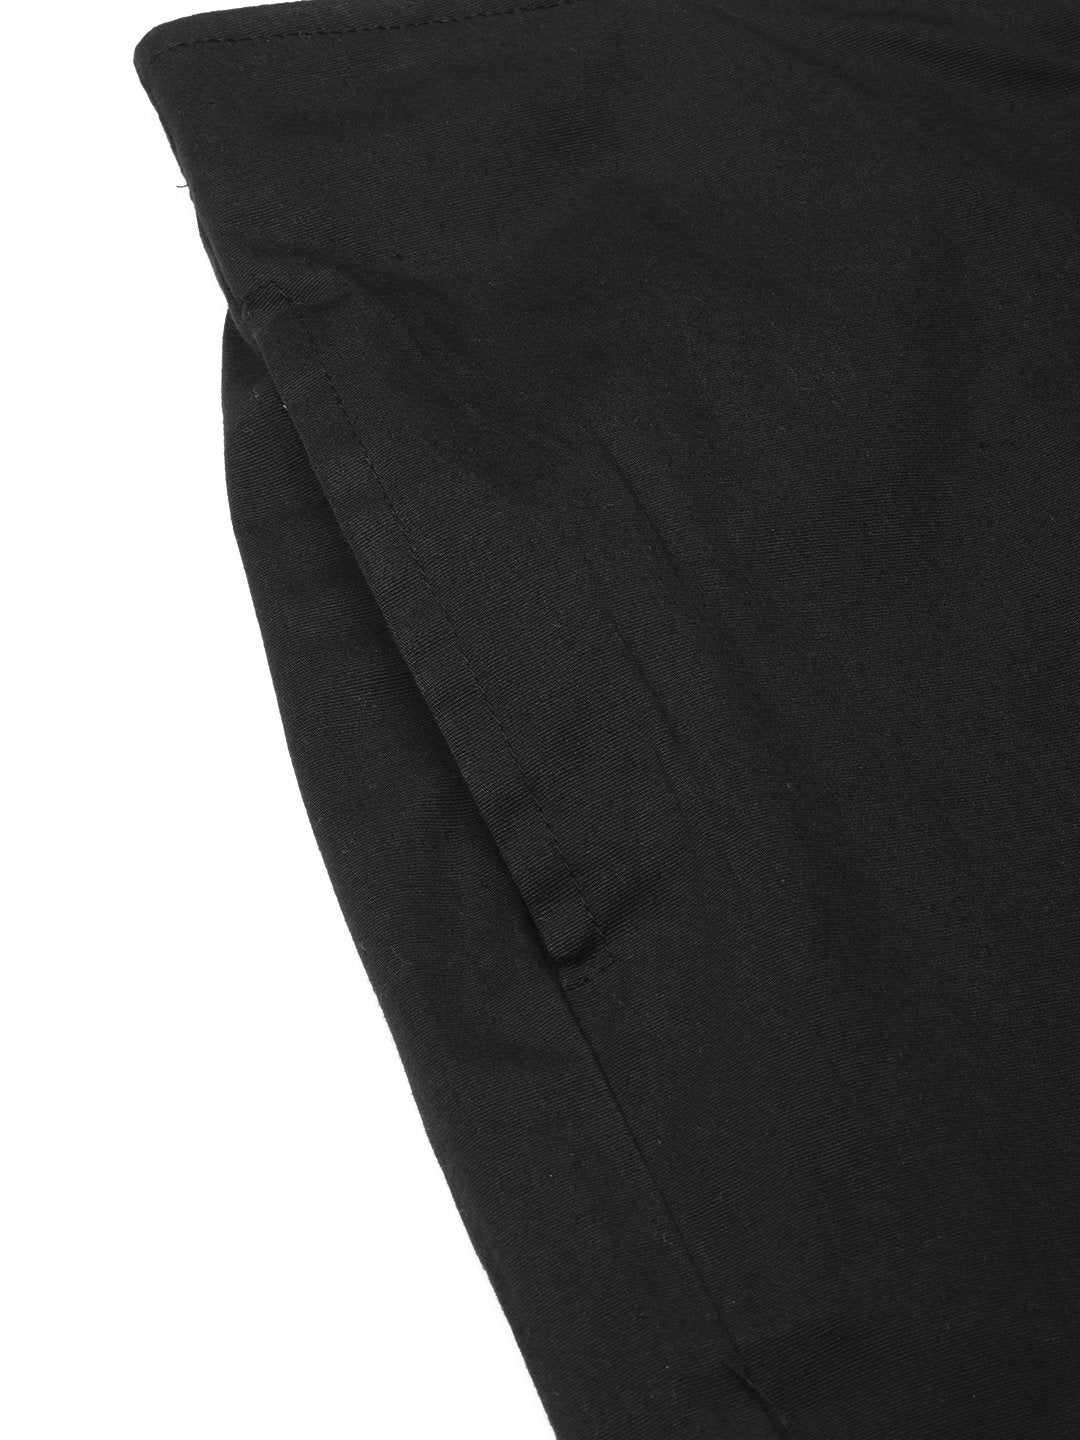 Women's Black Smart Slim Fit Solid Bottom Flared Trousers - Jompers